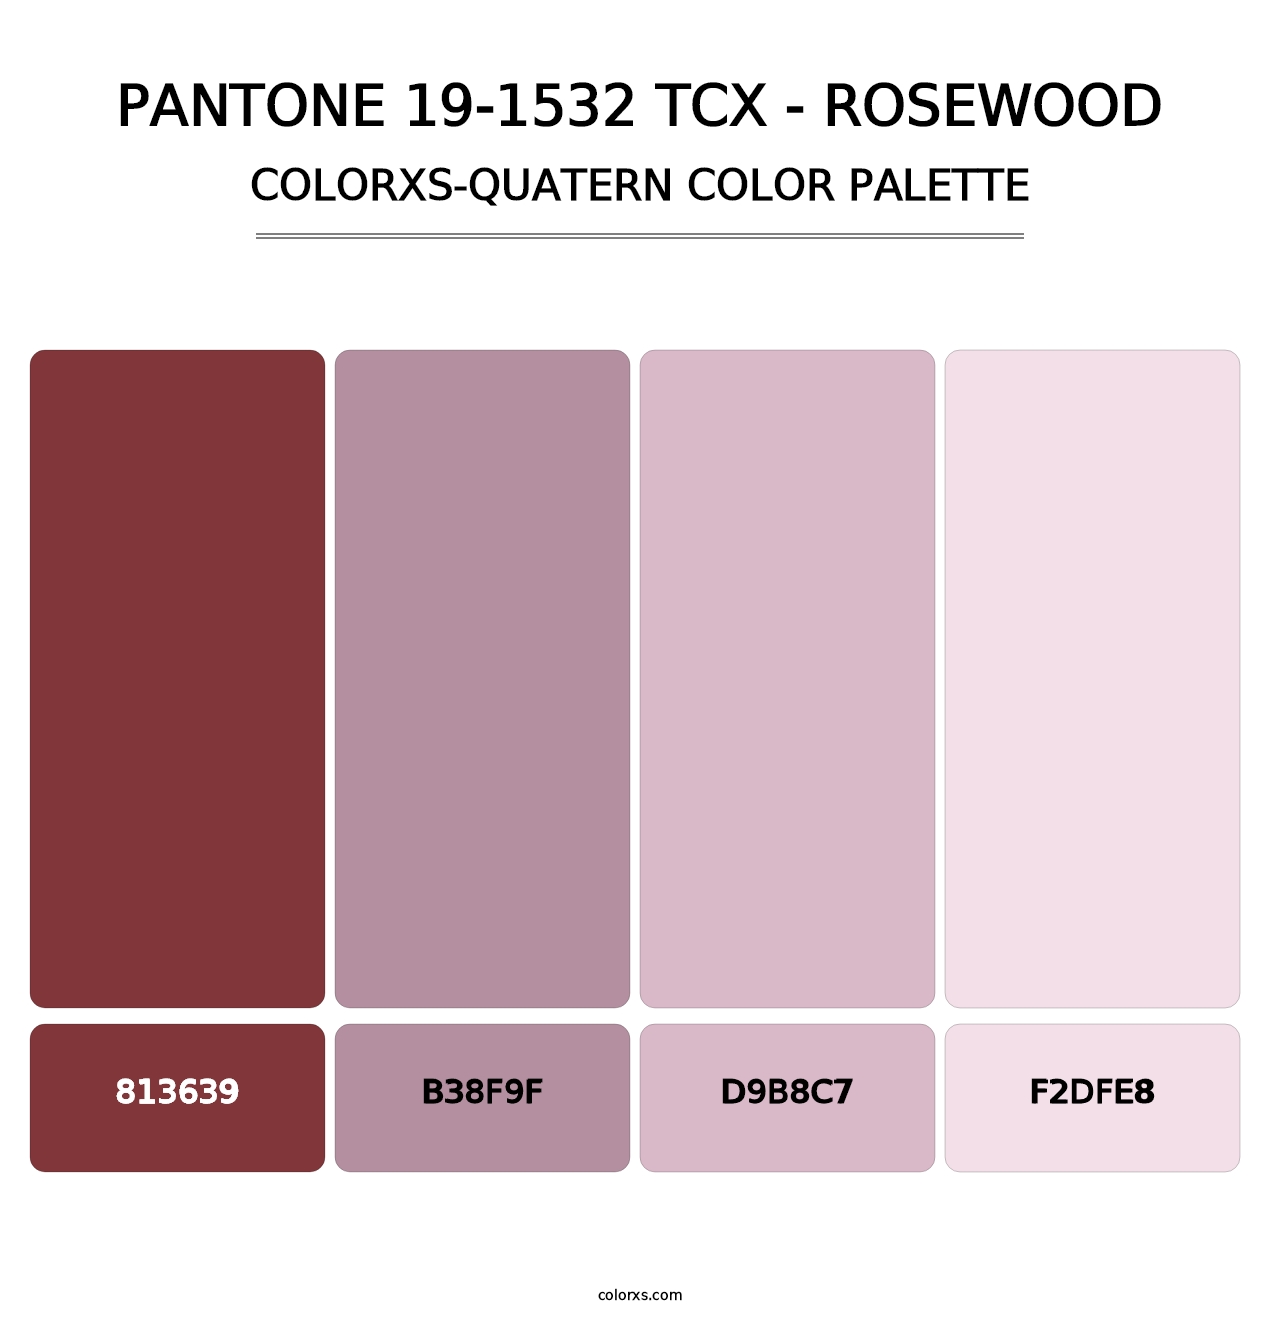 PANTONE 19-1532 TCX - Rosewood - Colorxs Quatern Palette